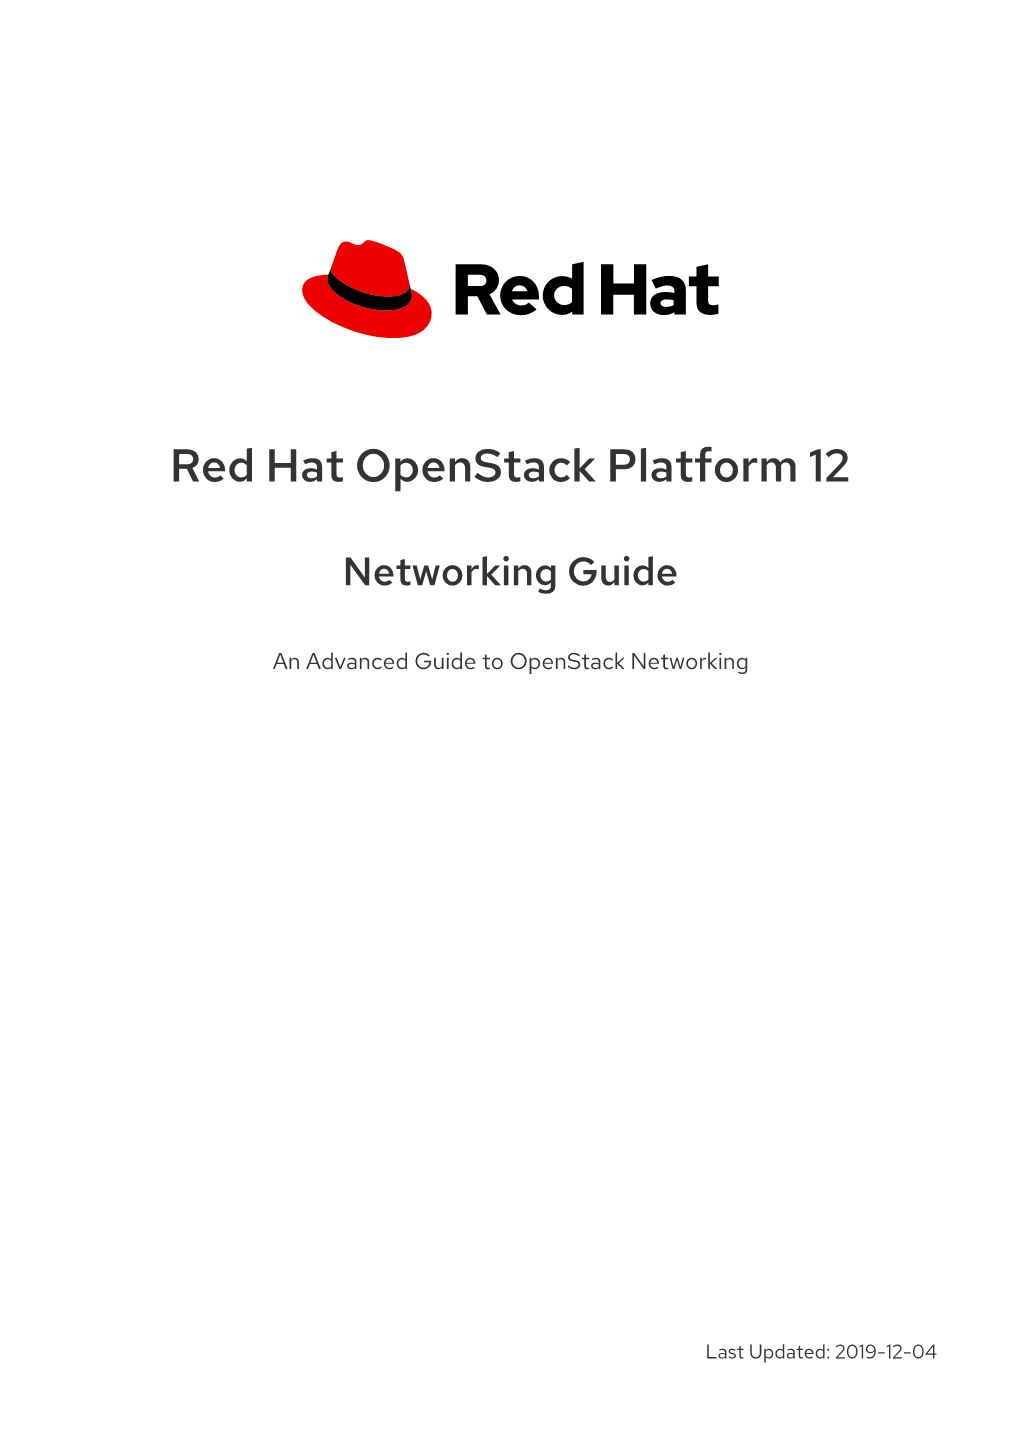 Red Hat Openstack Platform 12 Networking Guide